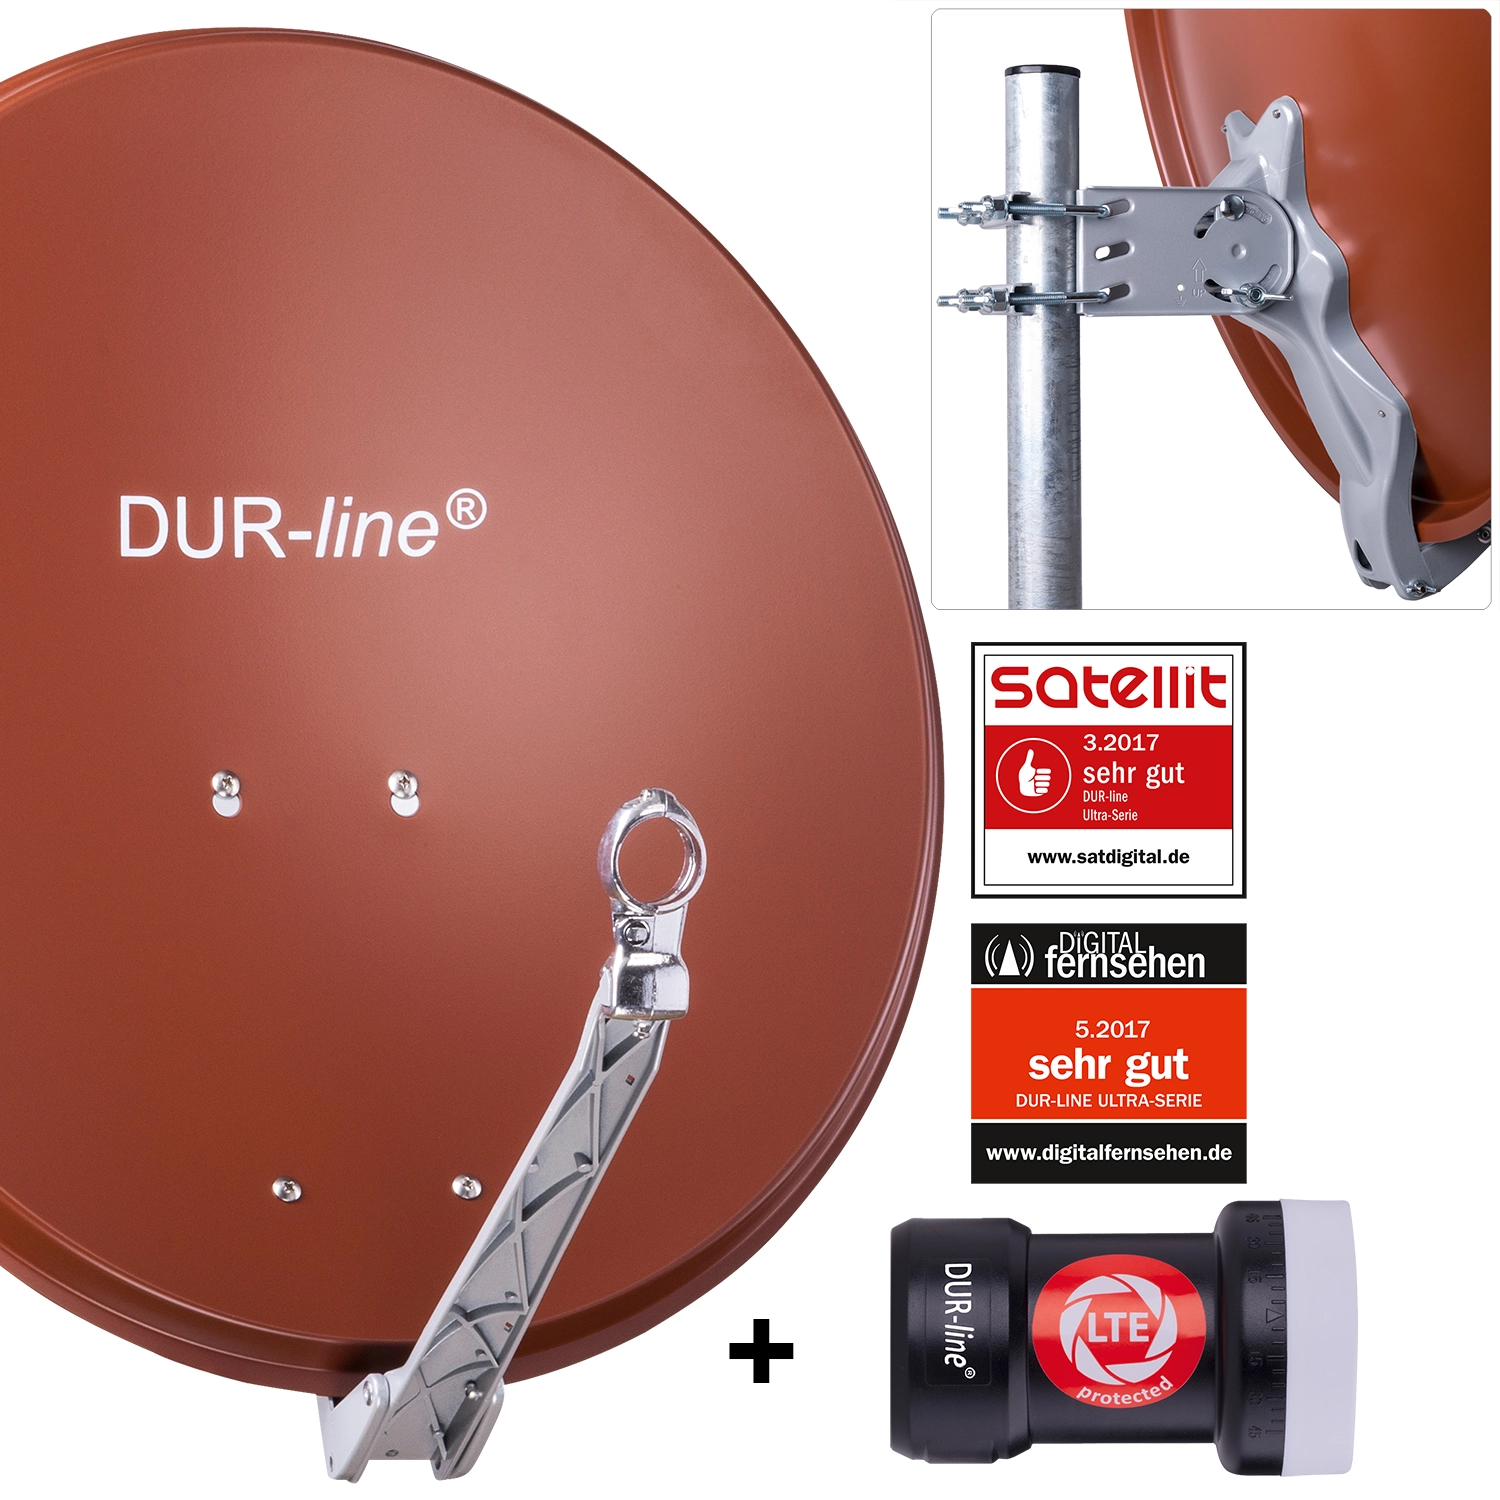 DUR-line Select 60 R + +Ultra Single LNB - 1 Teilnehmer Set